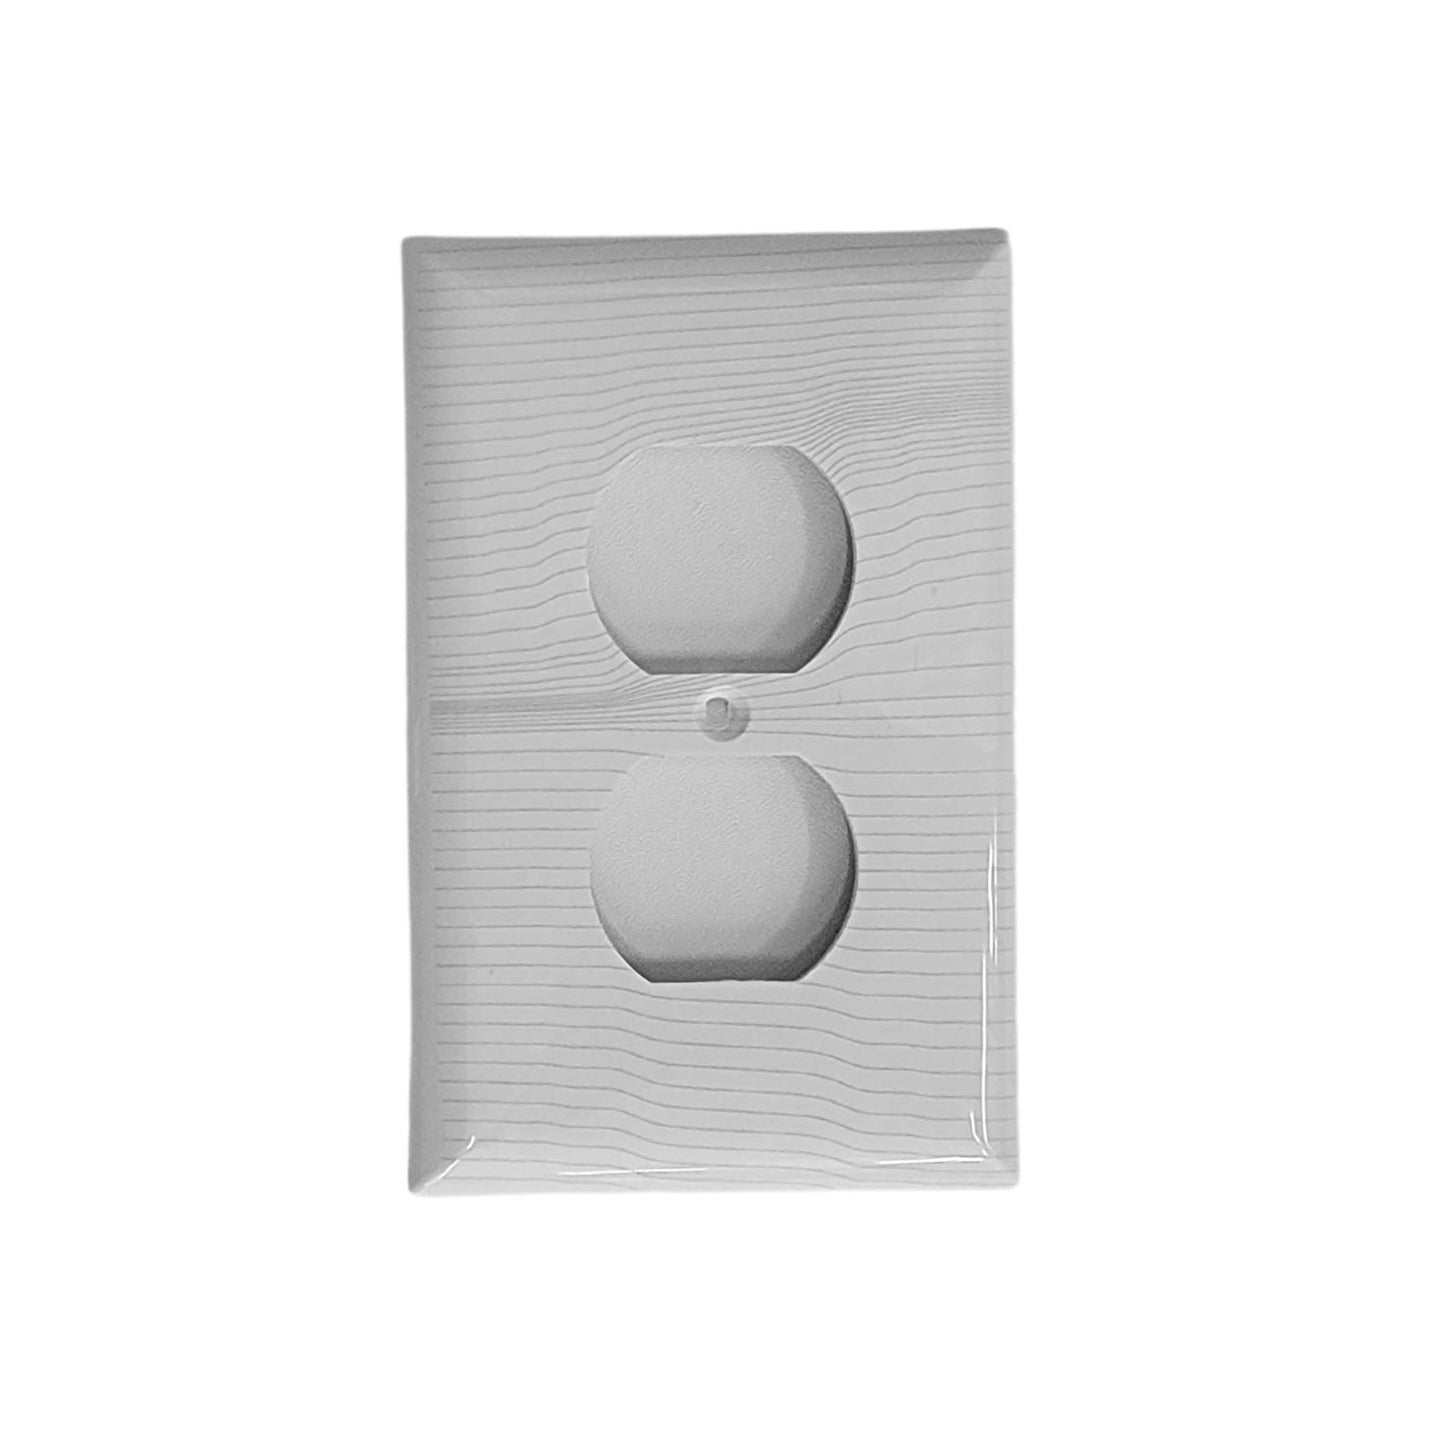 Geometric Design Single Duplex Outlet Cover Wall Plate White LA144-PWP3